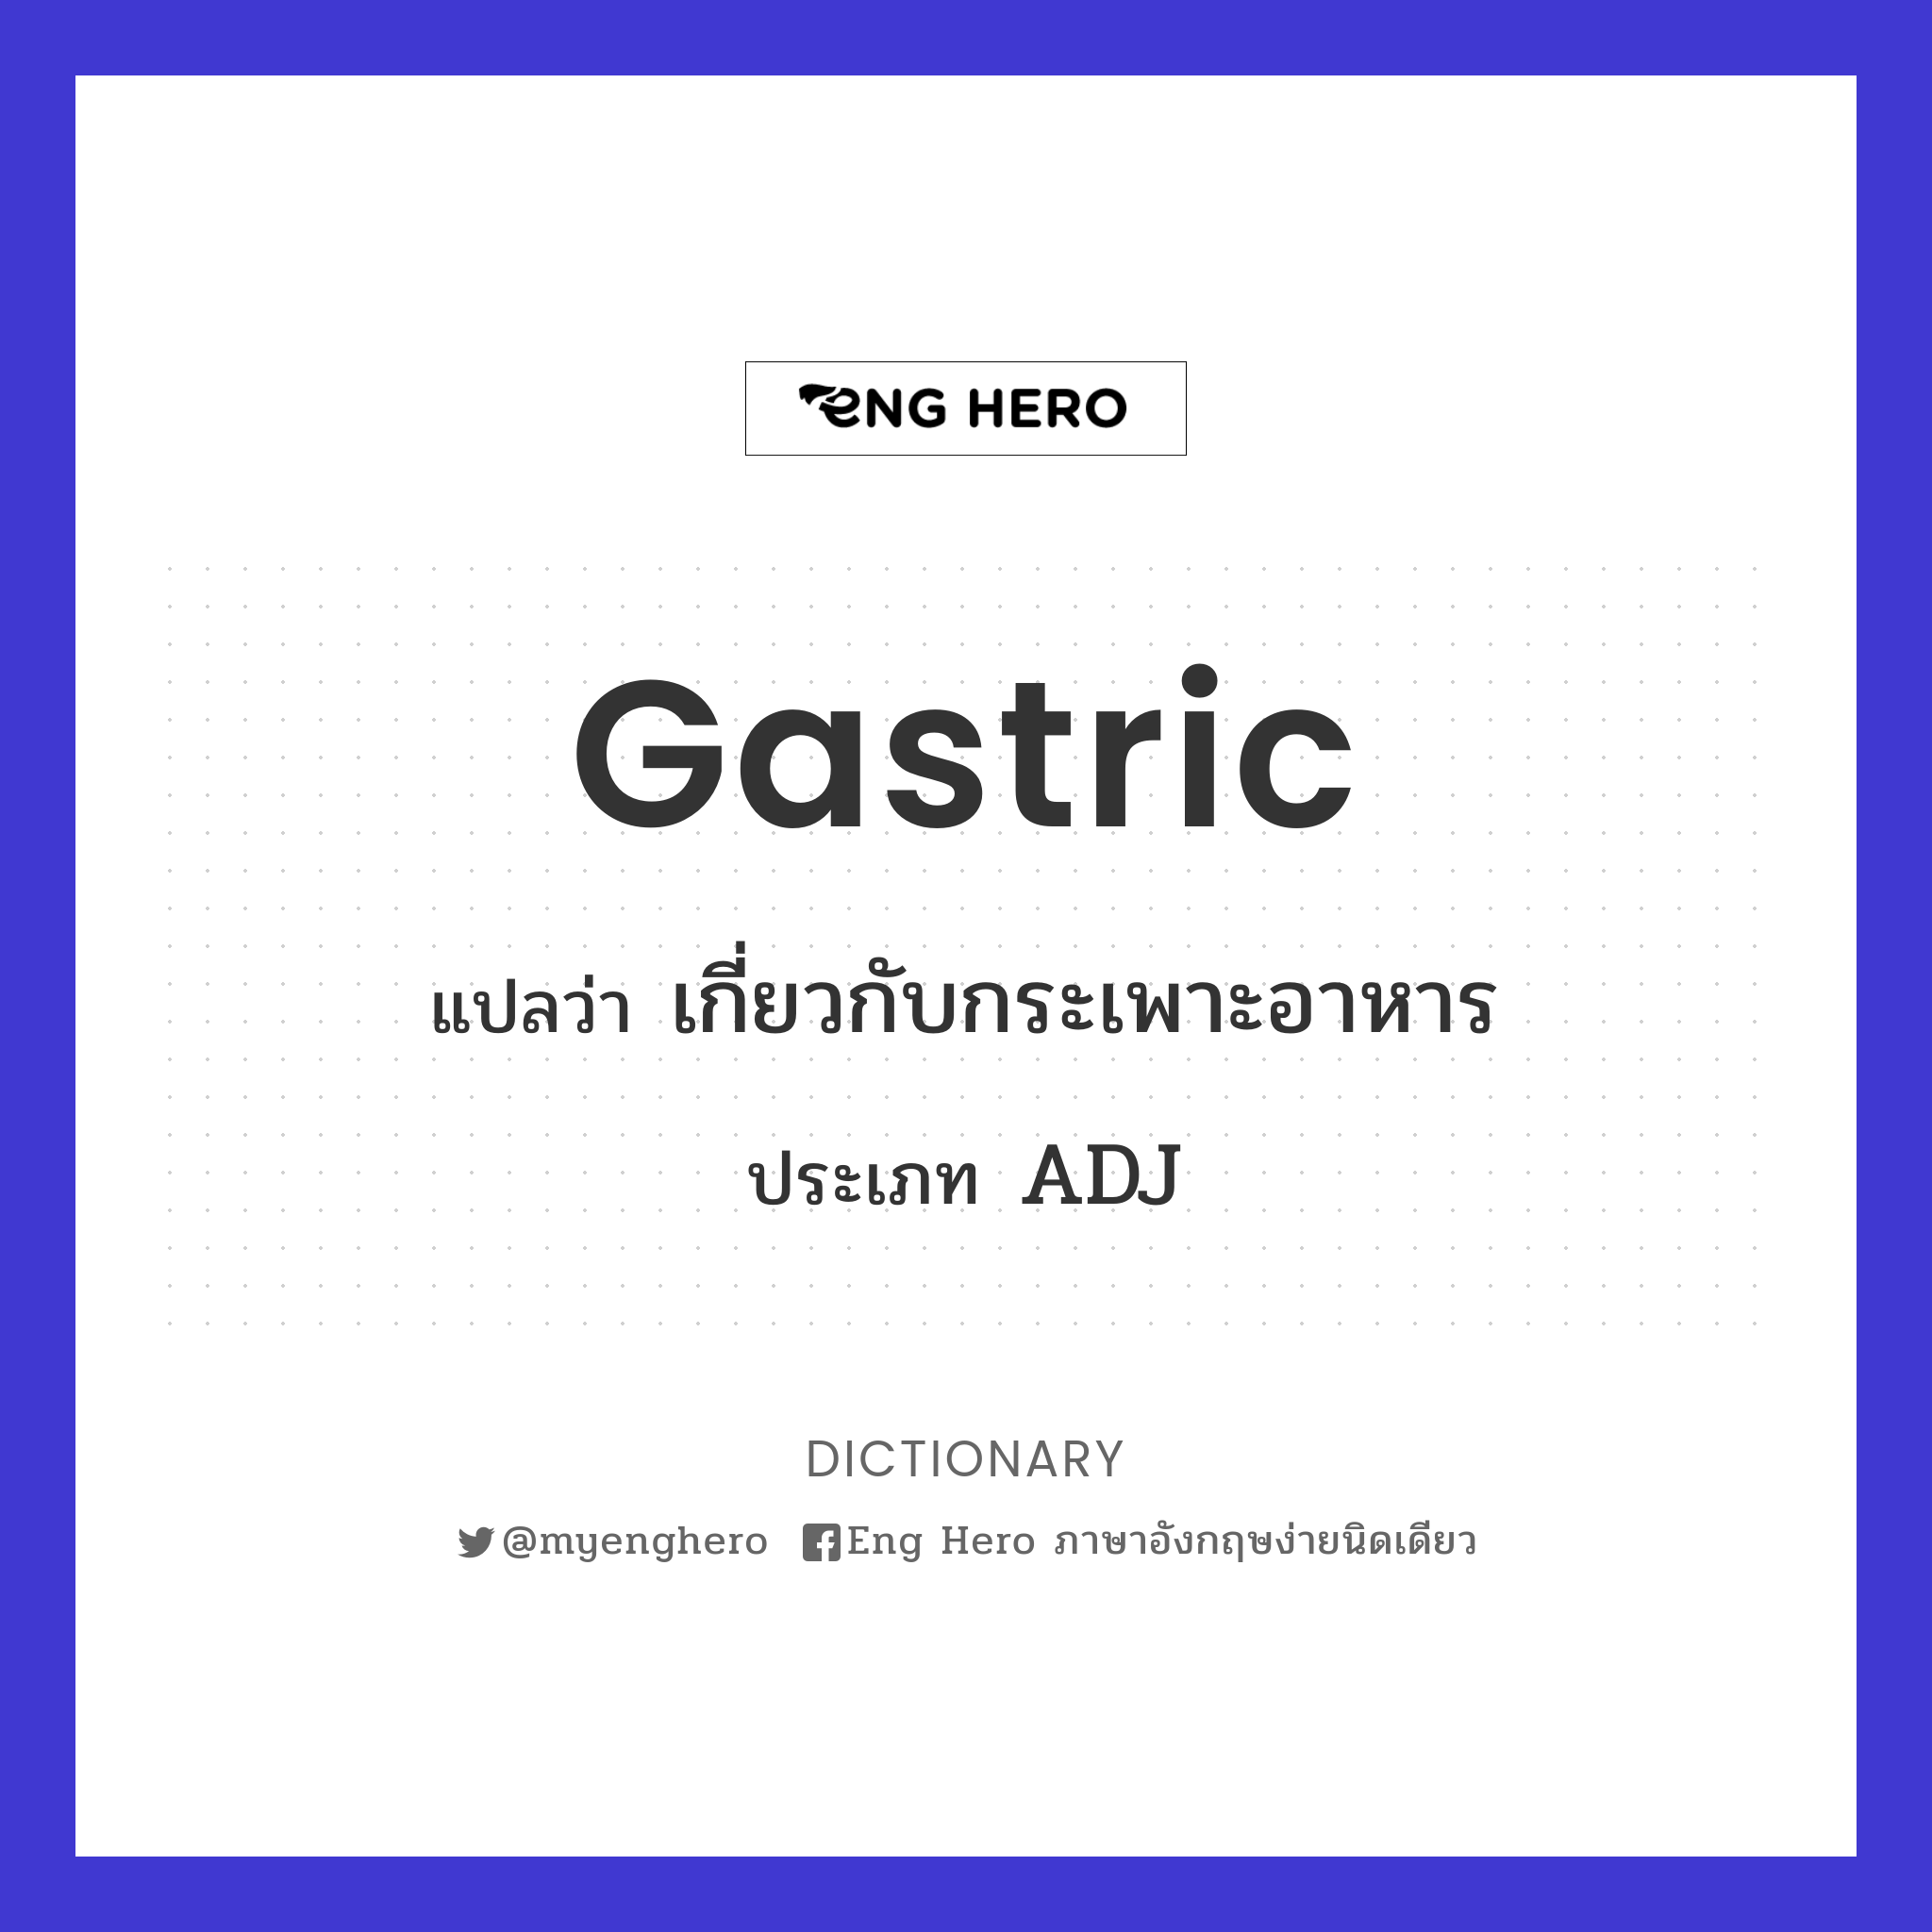 gastric